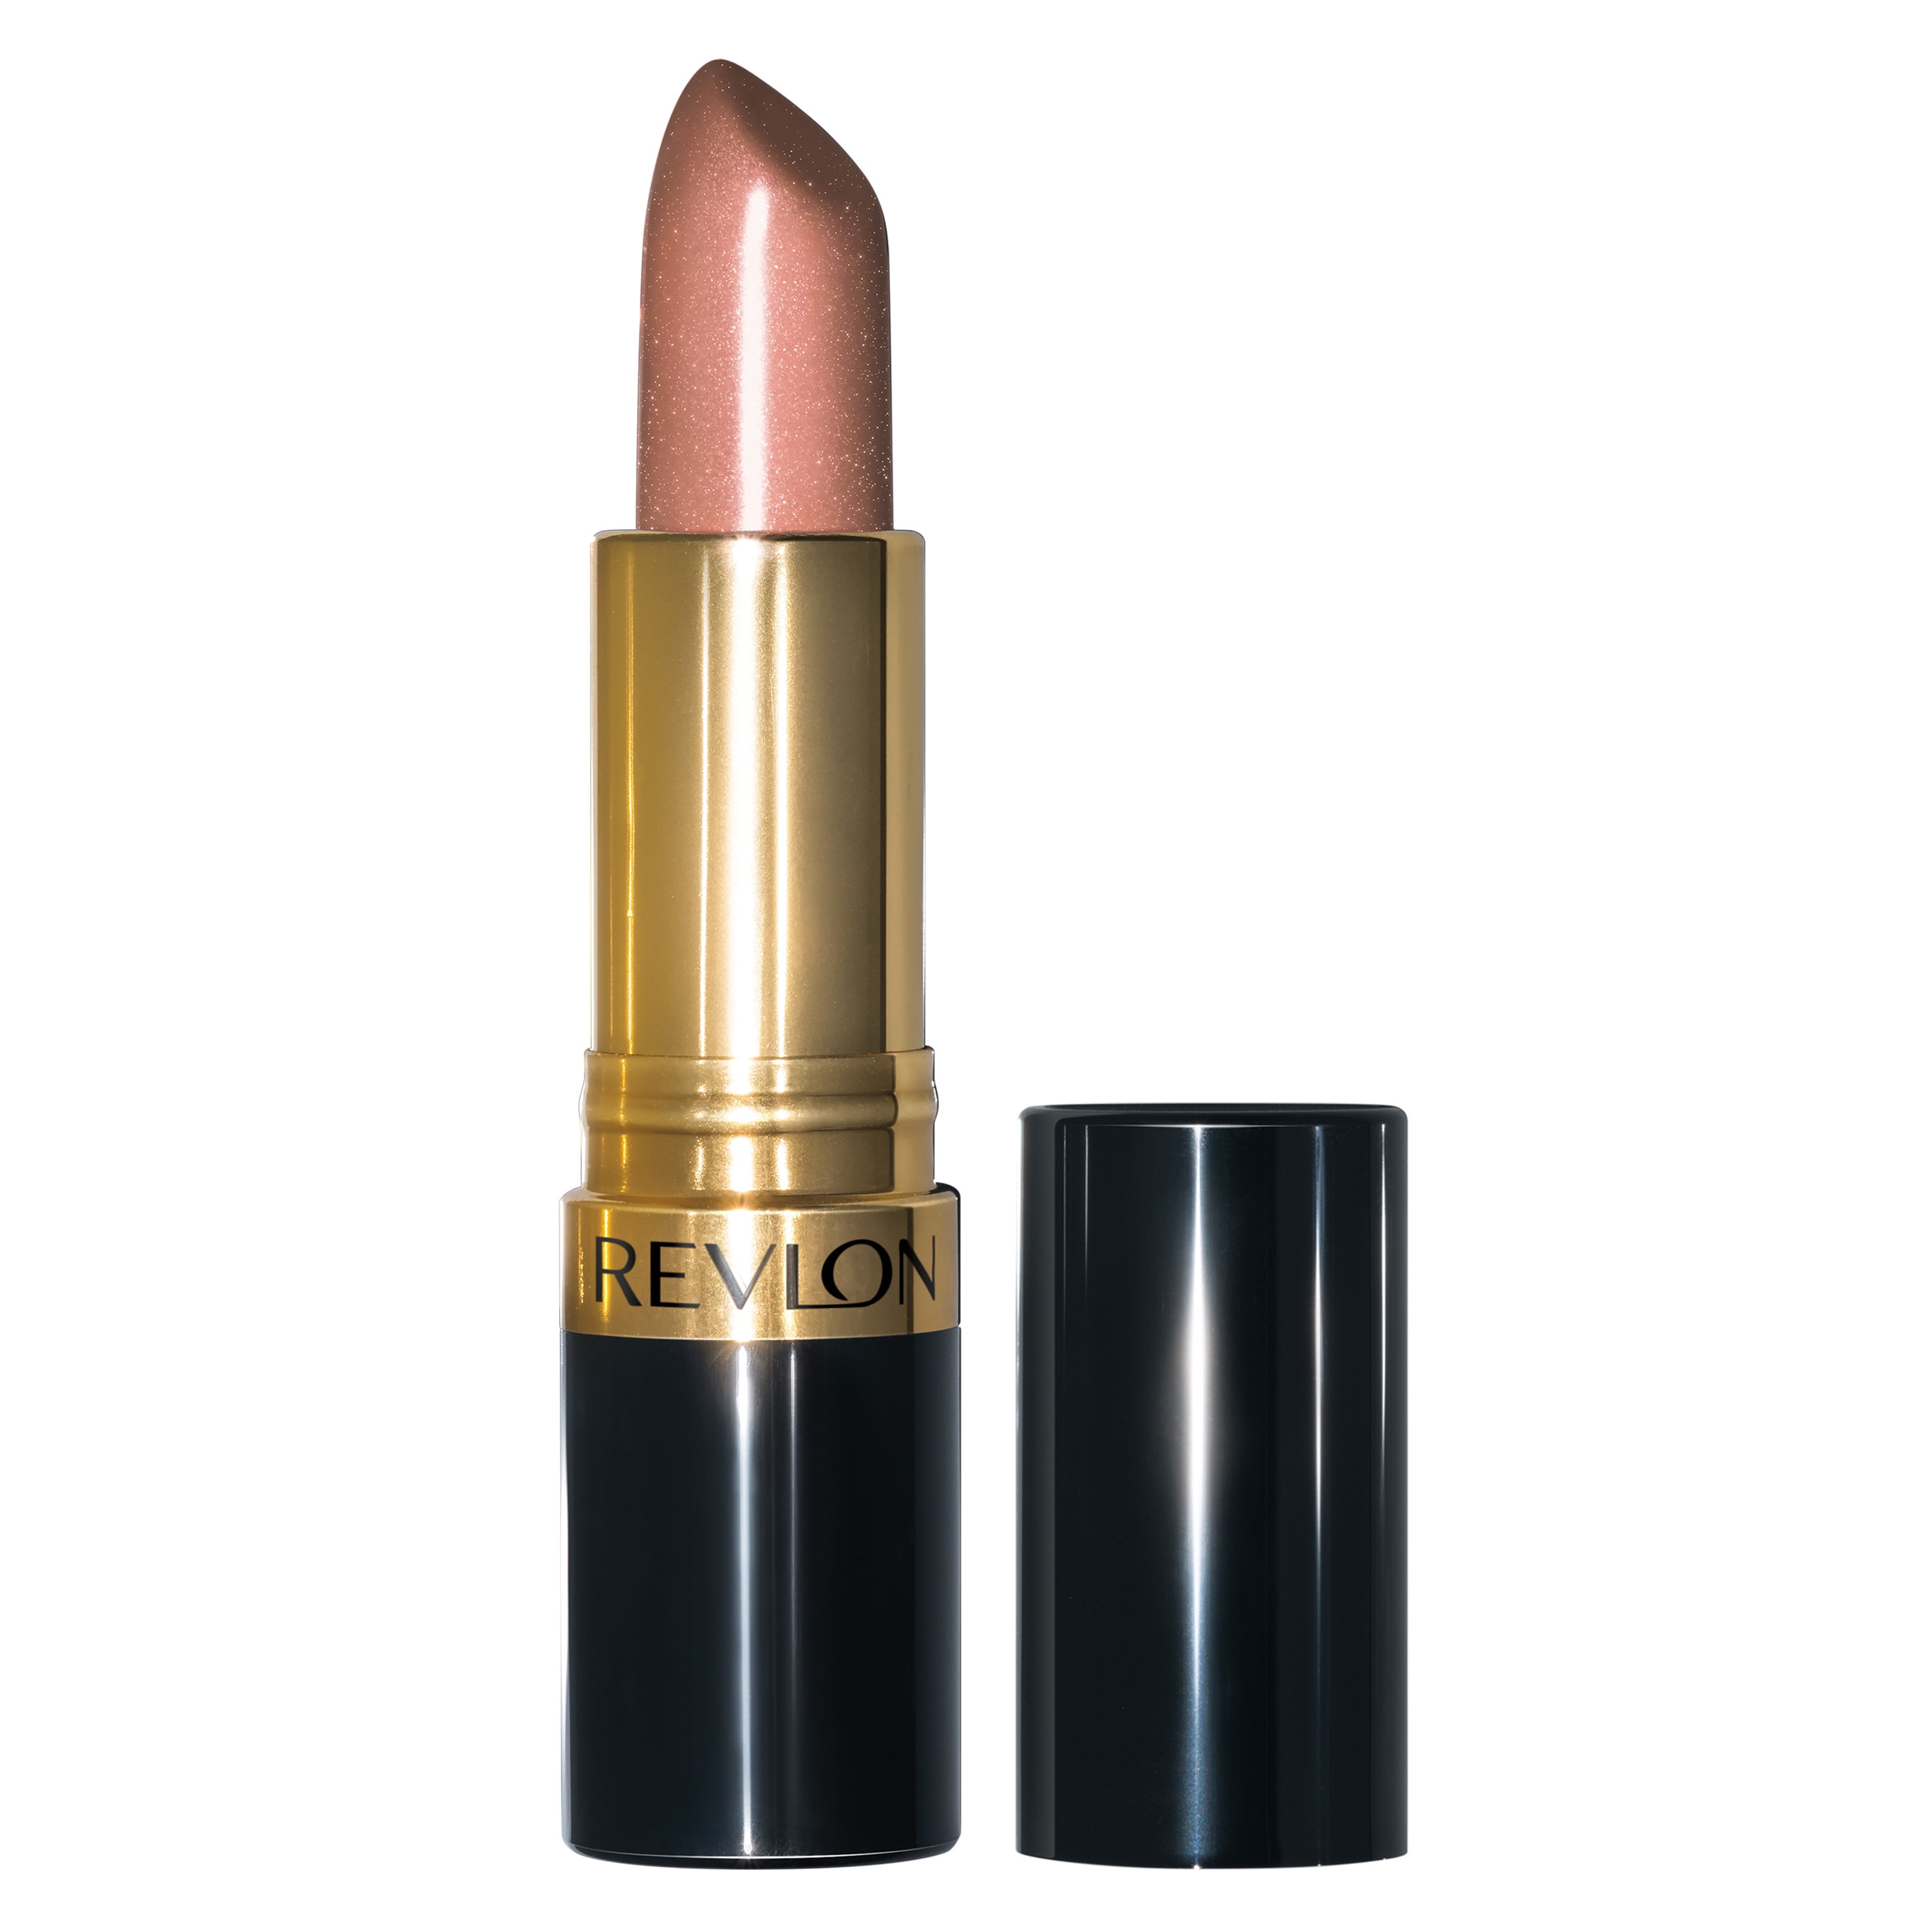 Revlon Super Lustrous Lipstick with Vitamin E and Avocado Oil, 205 Champagne On Ice, 0.15 oz